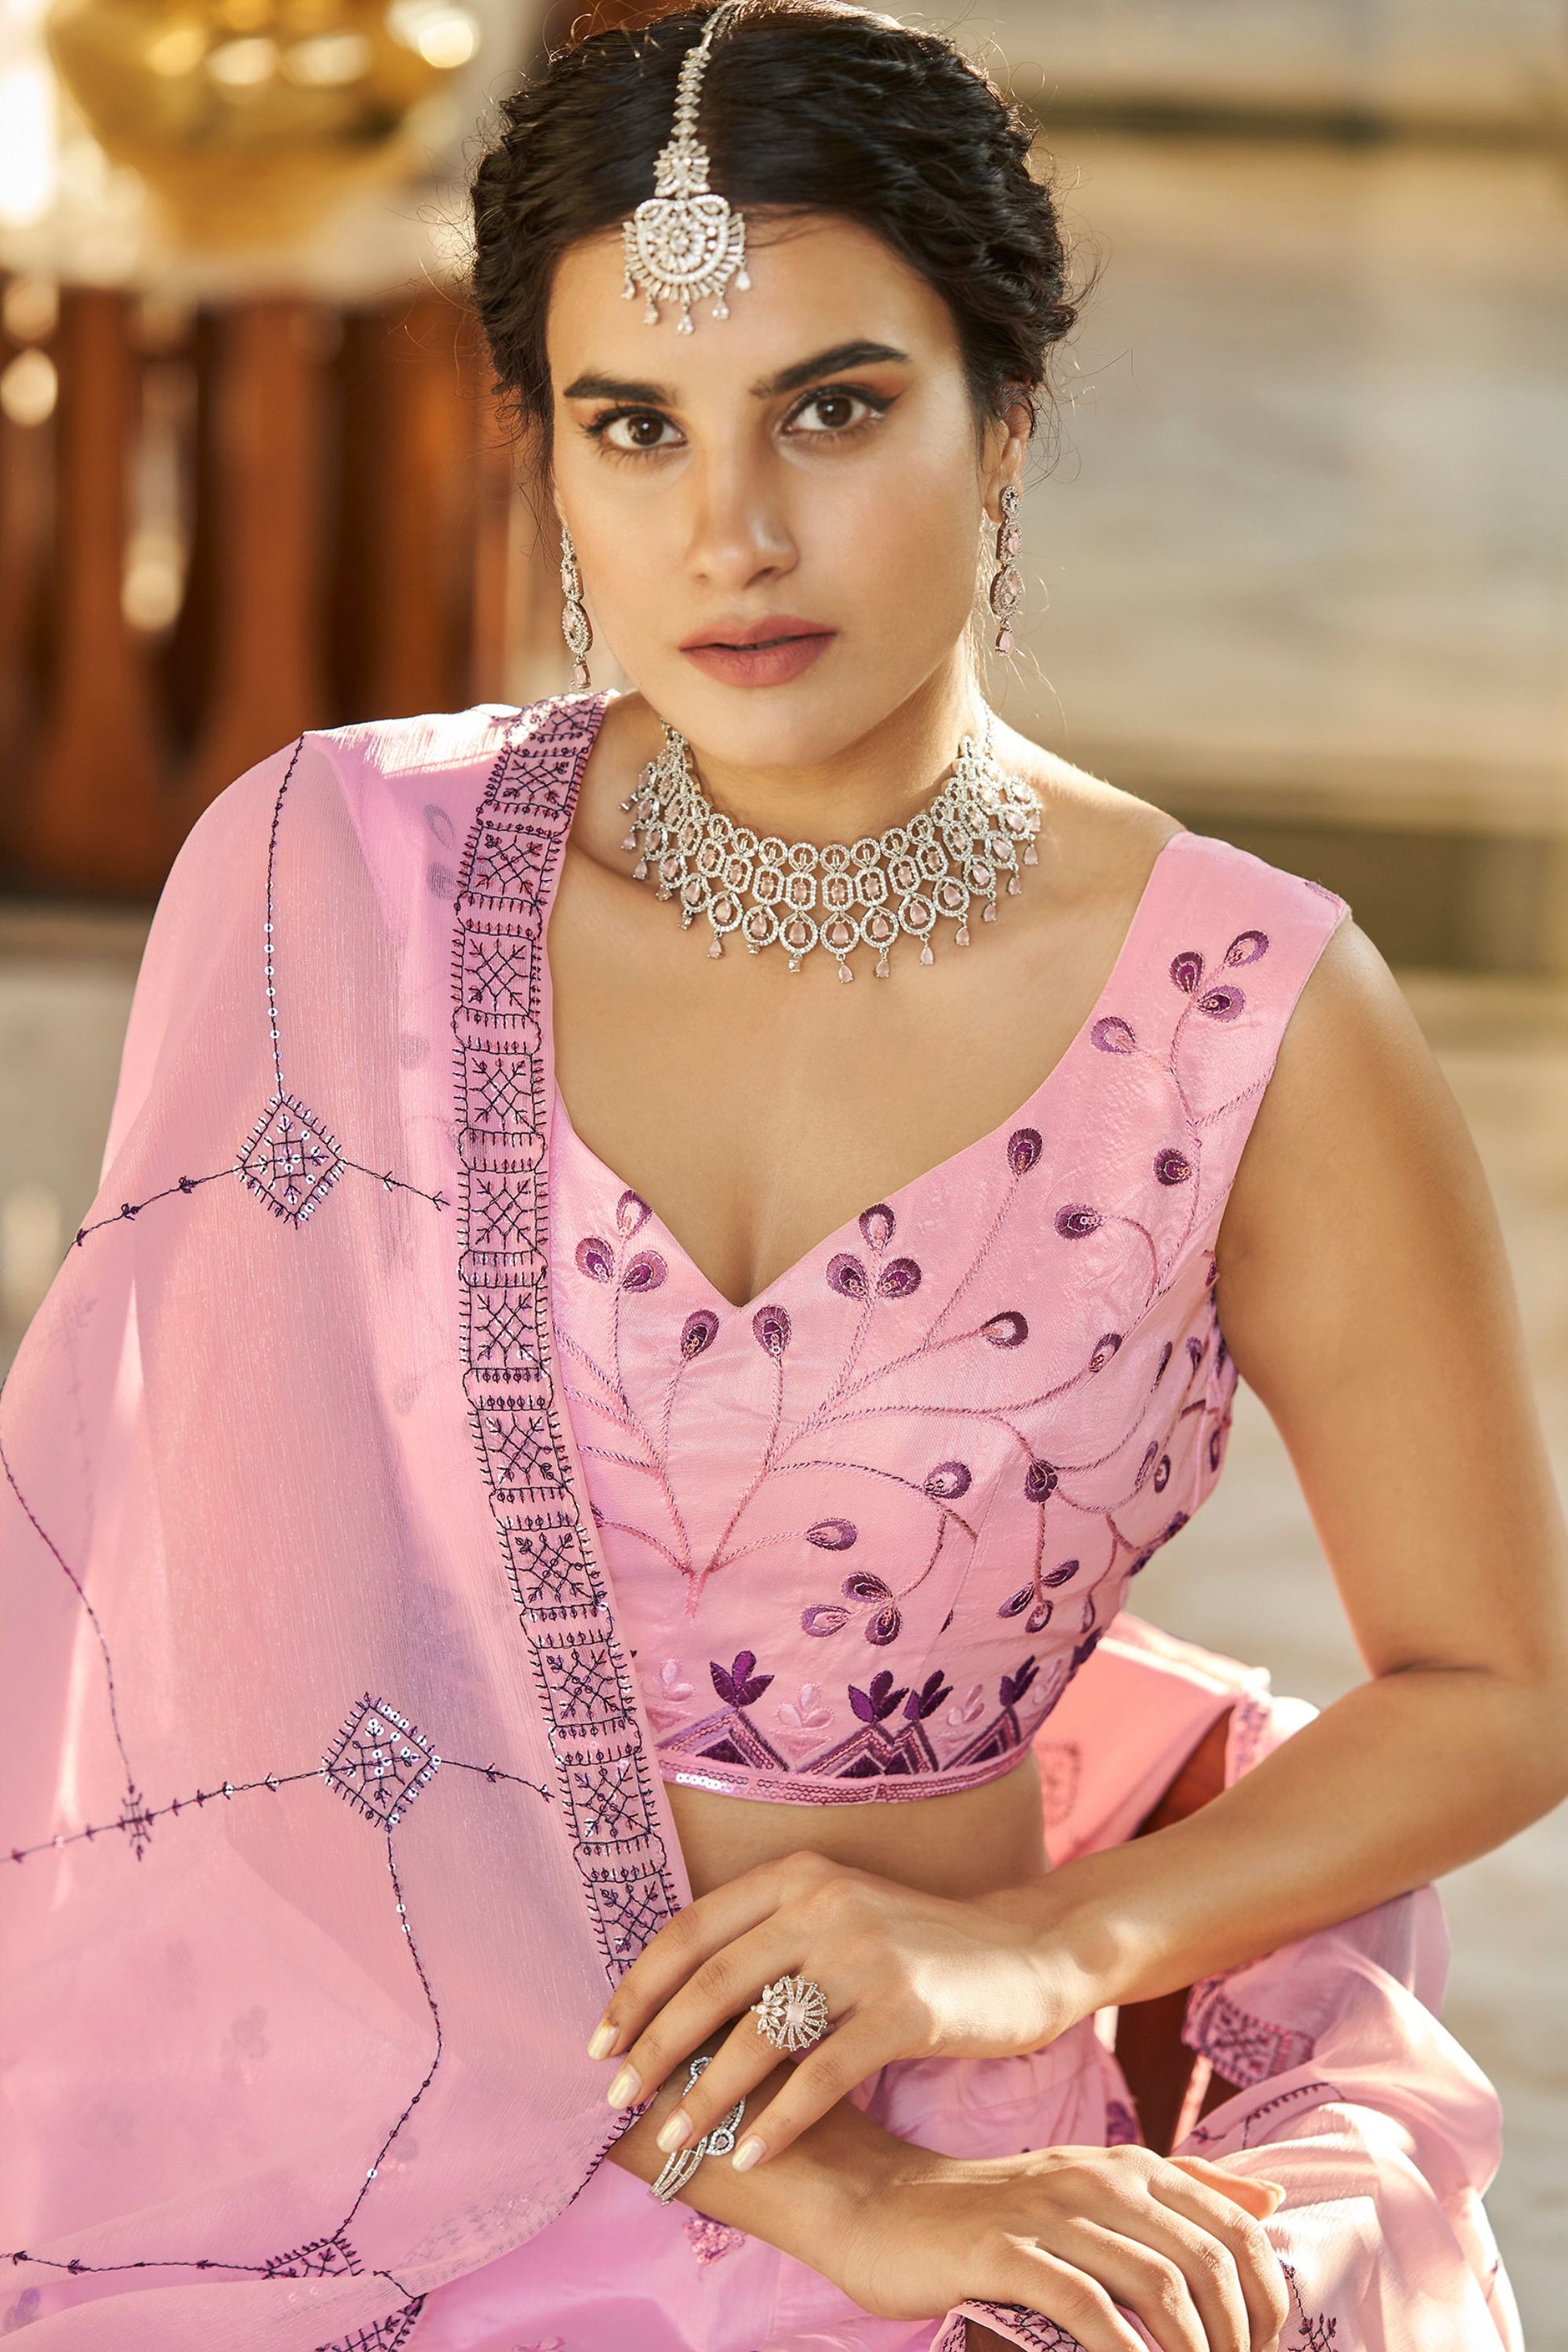 Pink Art Silk Lehenga Choli For Indian Festivals & Weddings - Sequence Embroidery Work, Thread Work